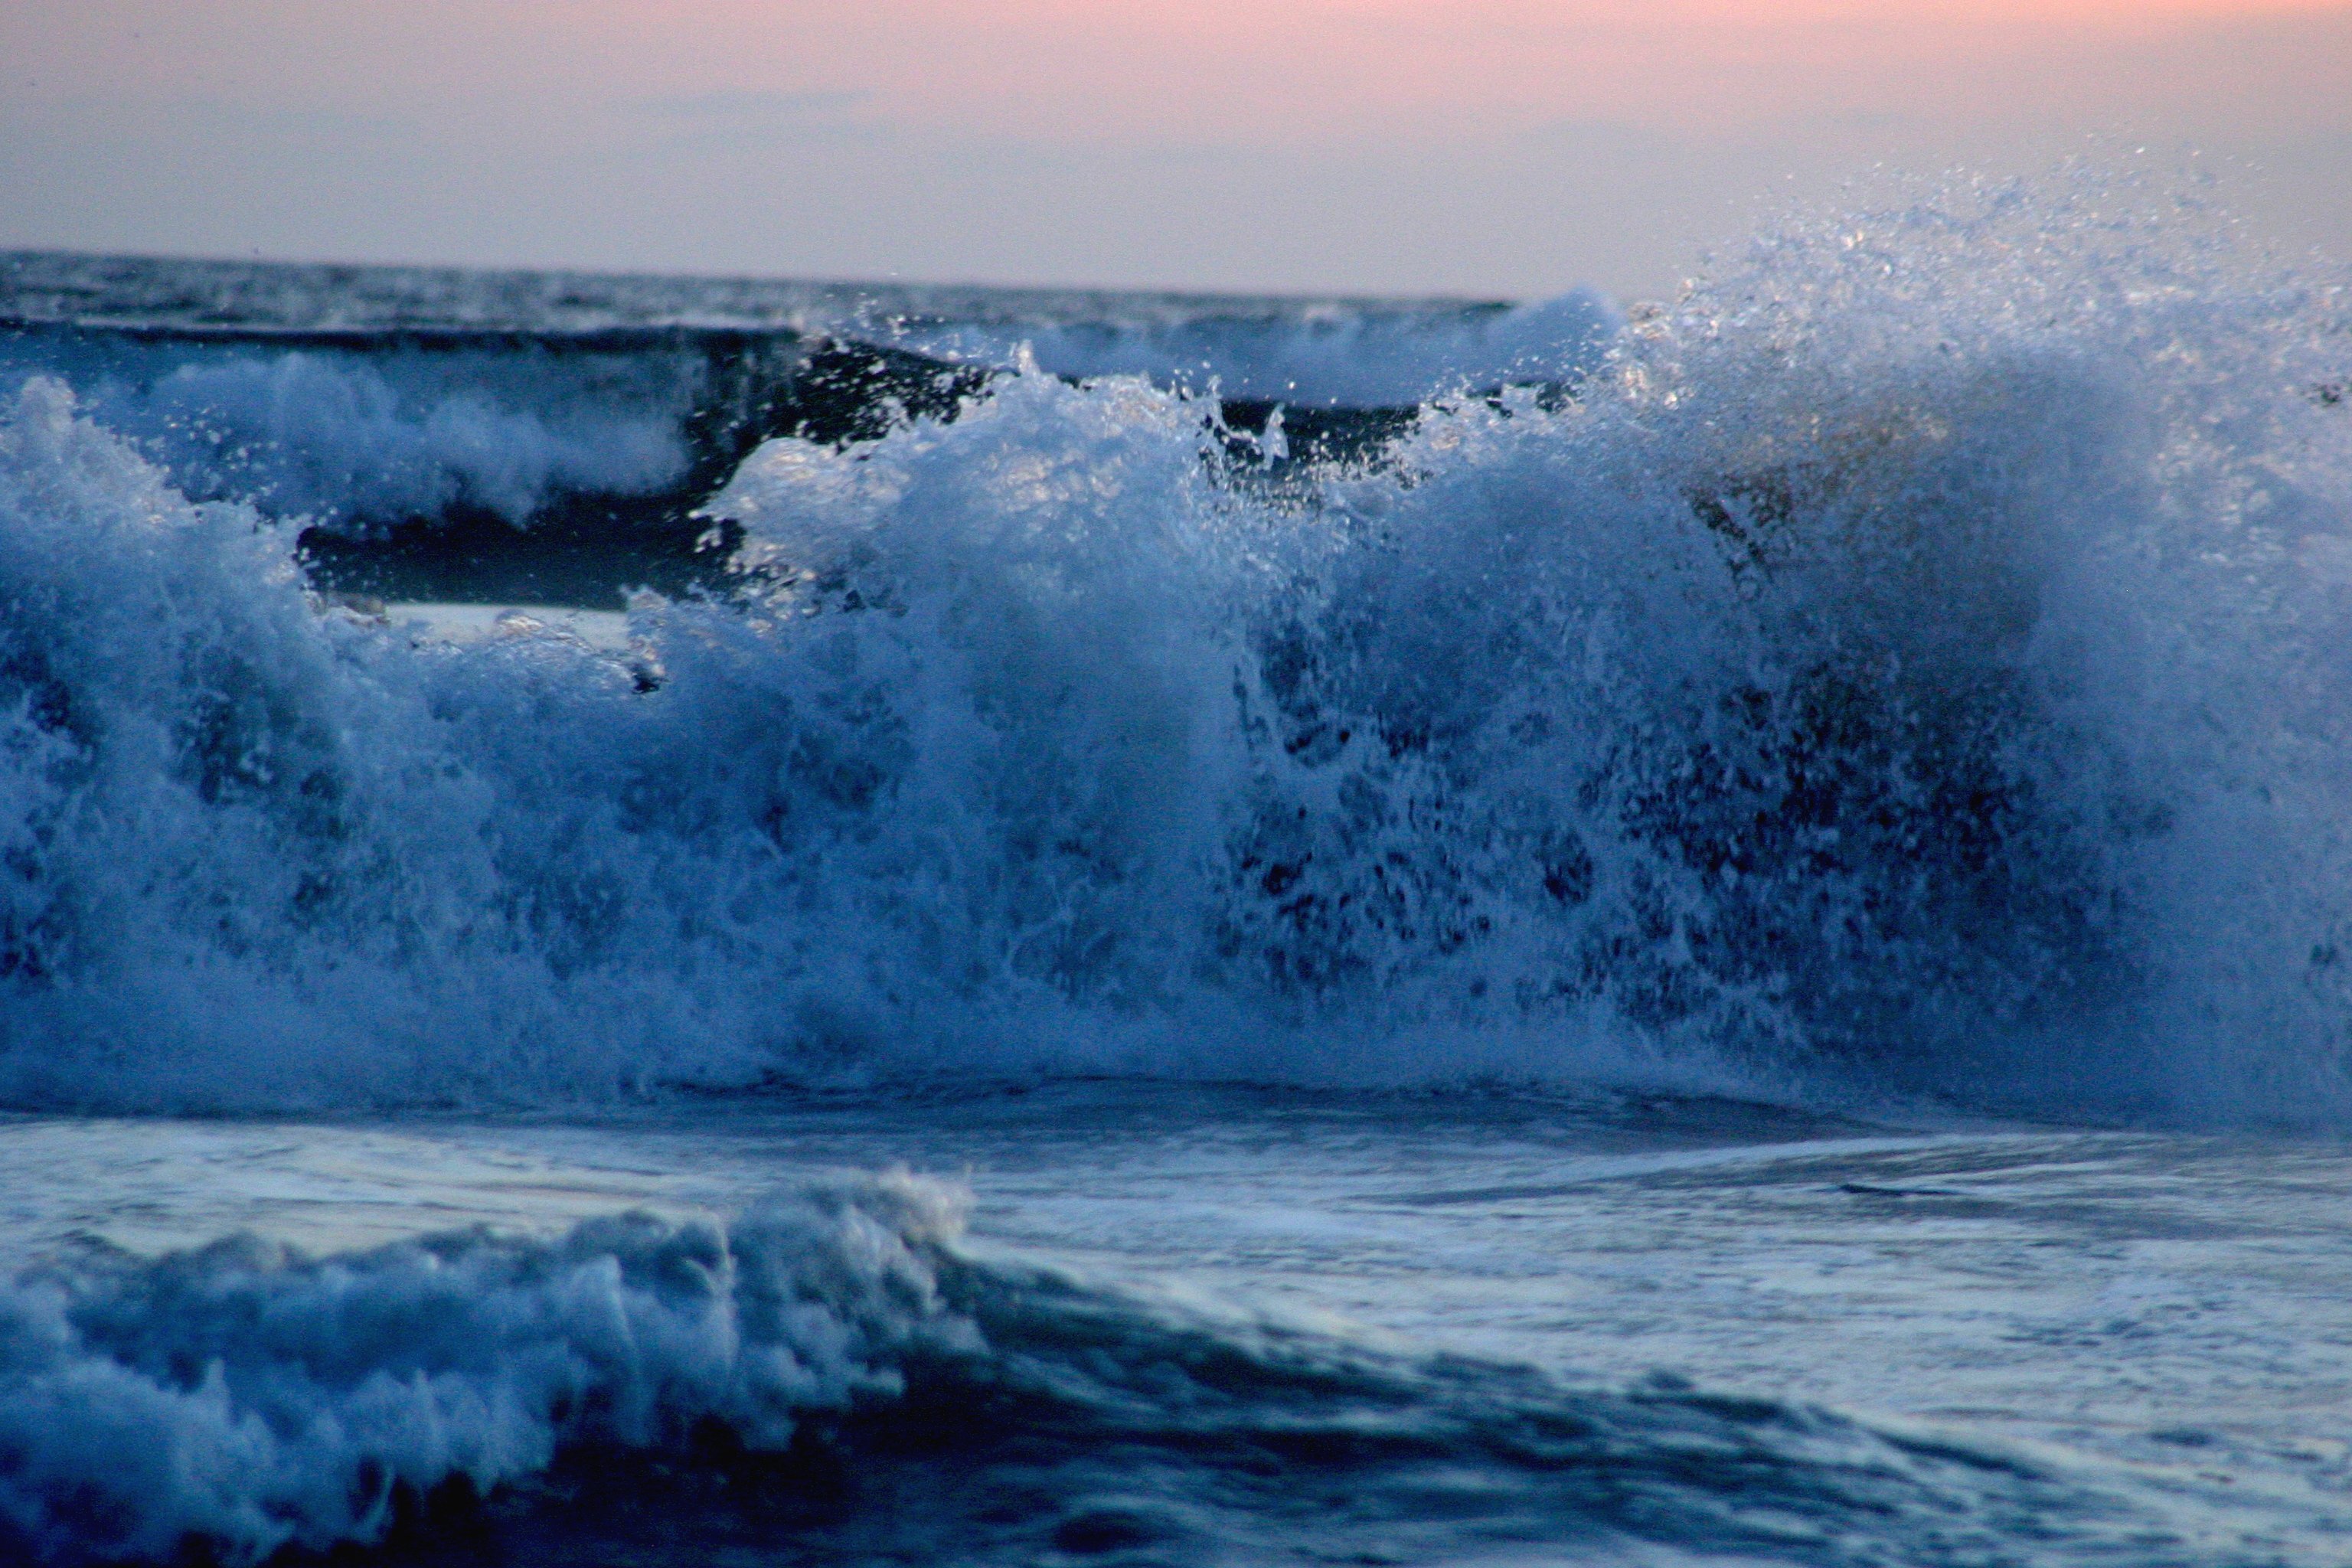 File:Wave Acapulco Breaking.jpg - Wikimedia Commons